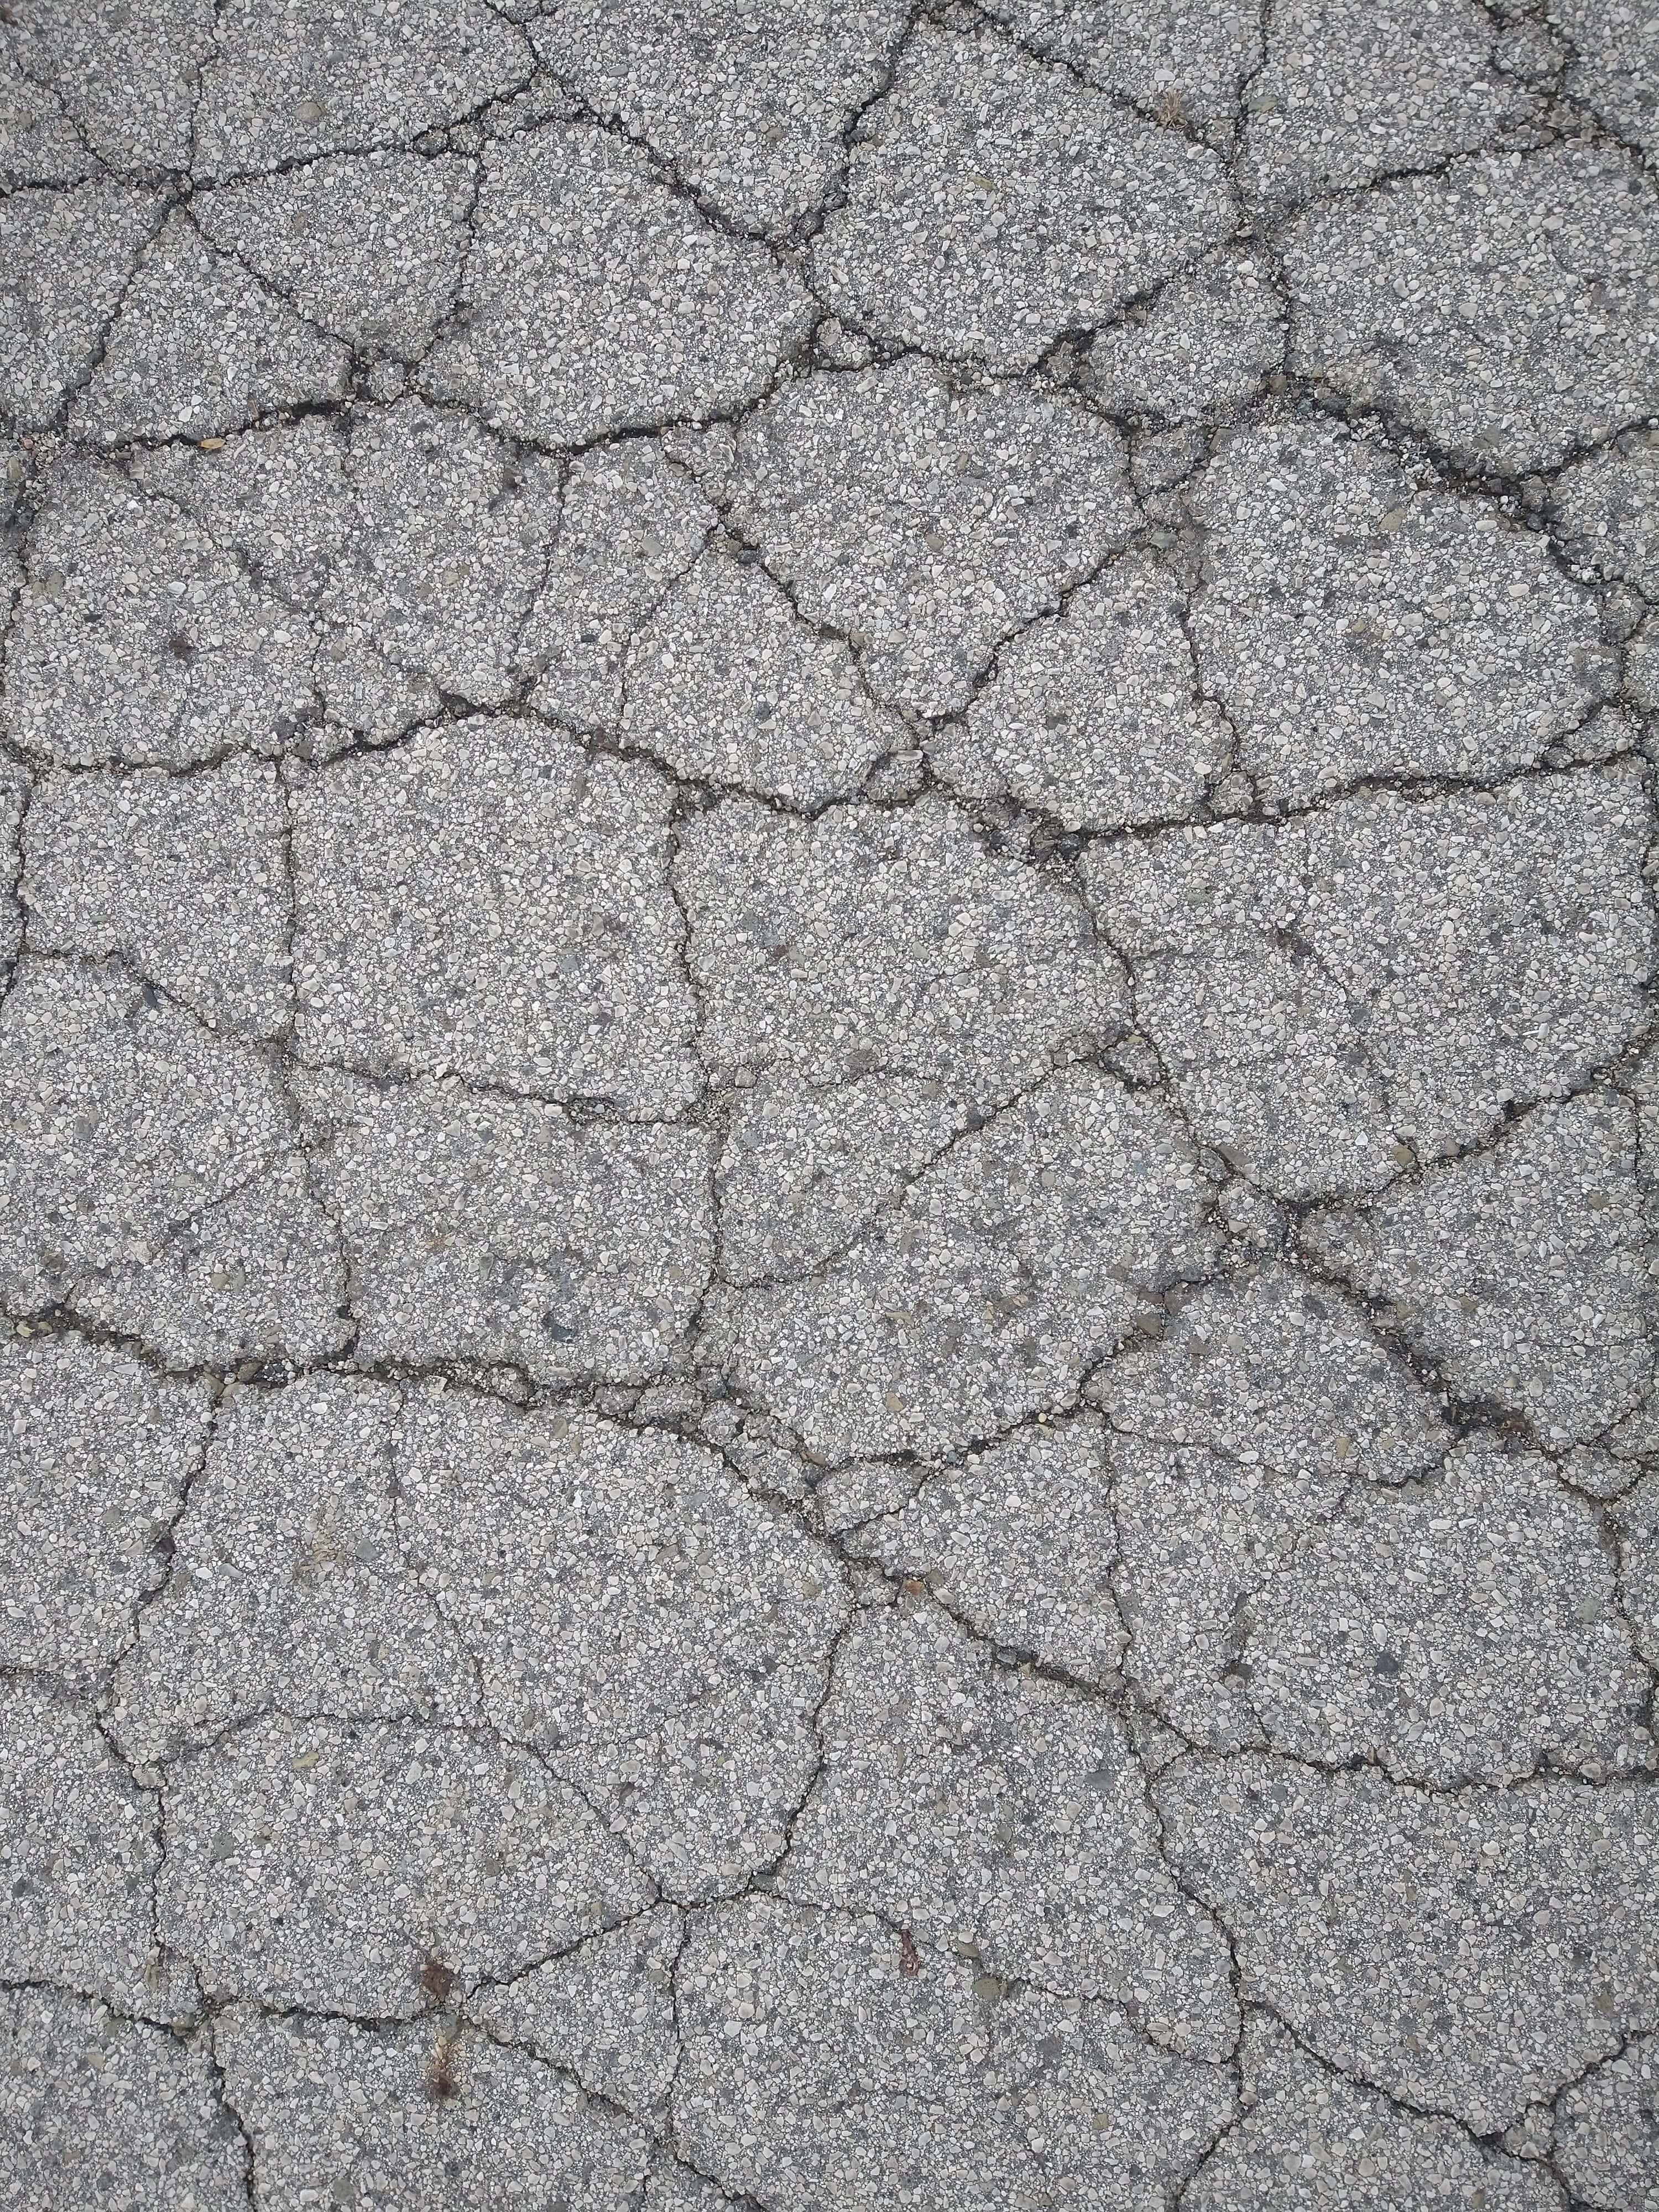 Free picture: concrete, grey, old, asphalt, pattern, texture